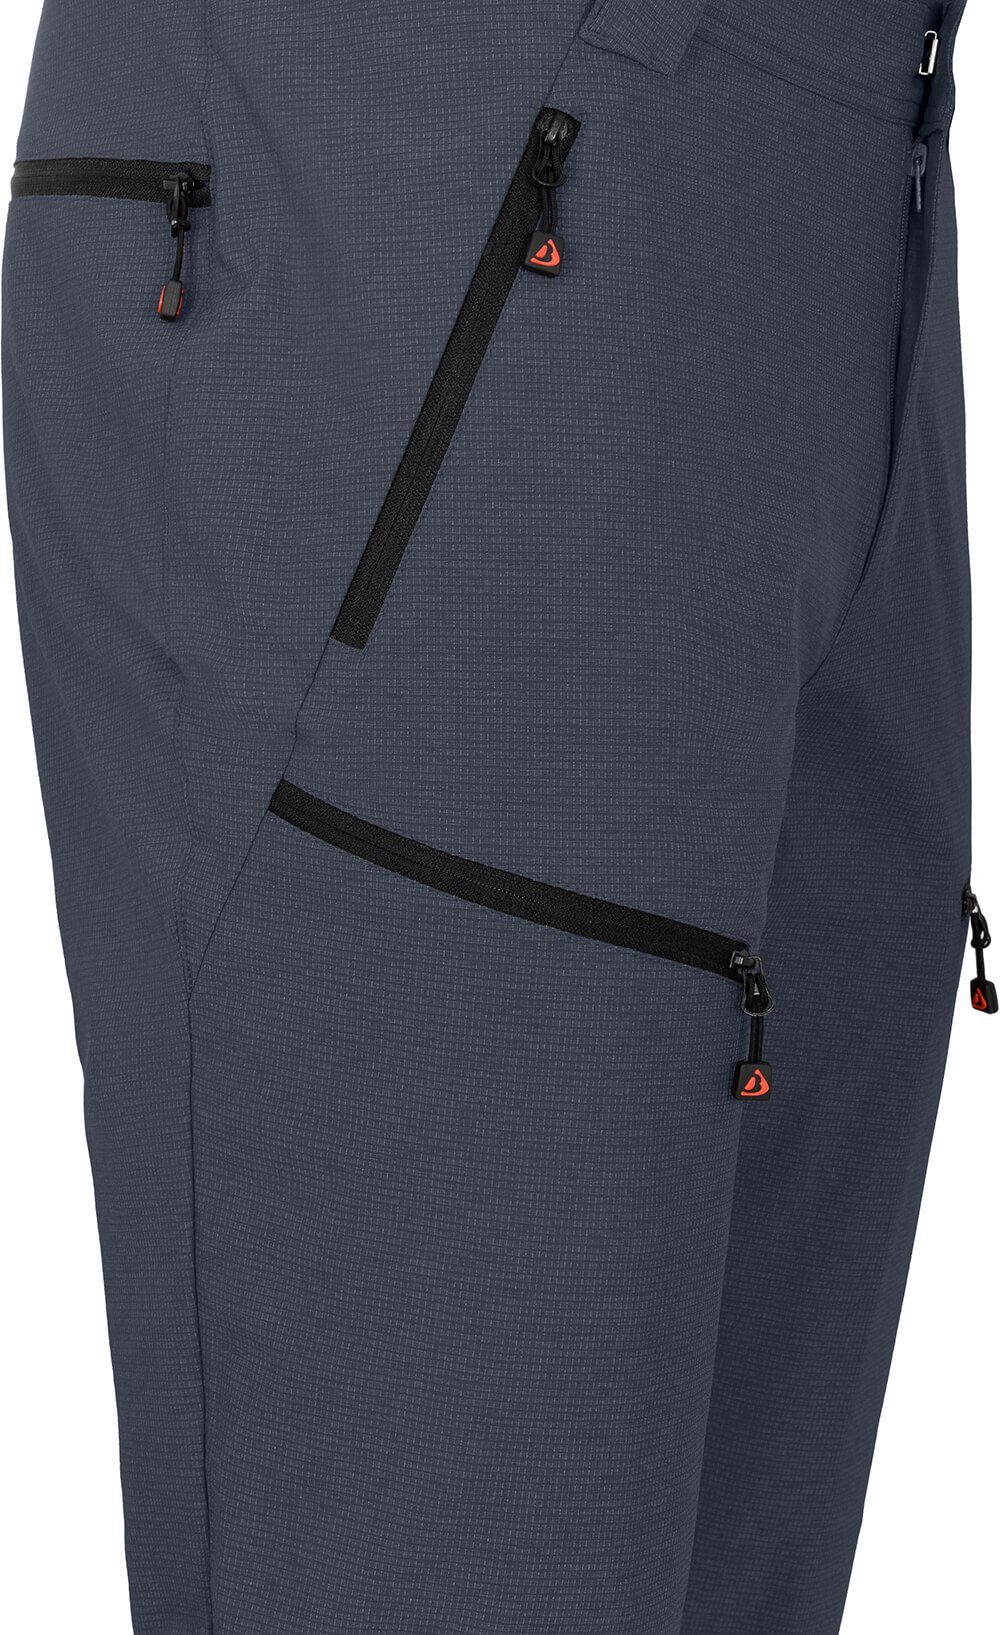 robust, grau/blau Wanderhose, Bergson Zip-off-Hose Damen elastisch, PORI Zipp-Off Normalgrößen,